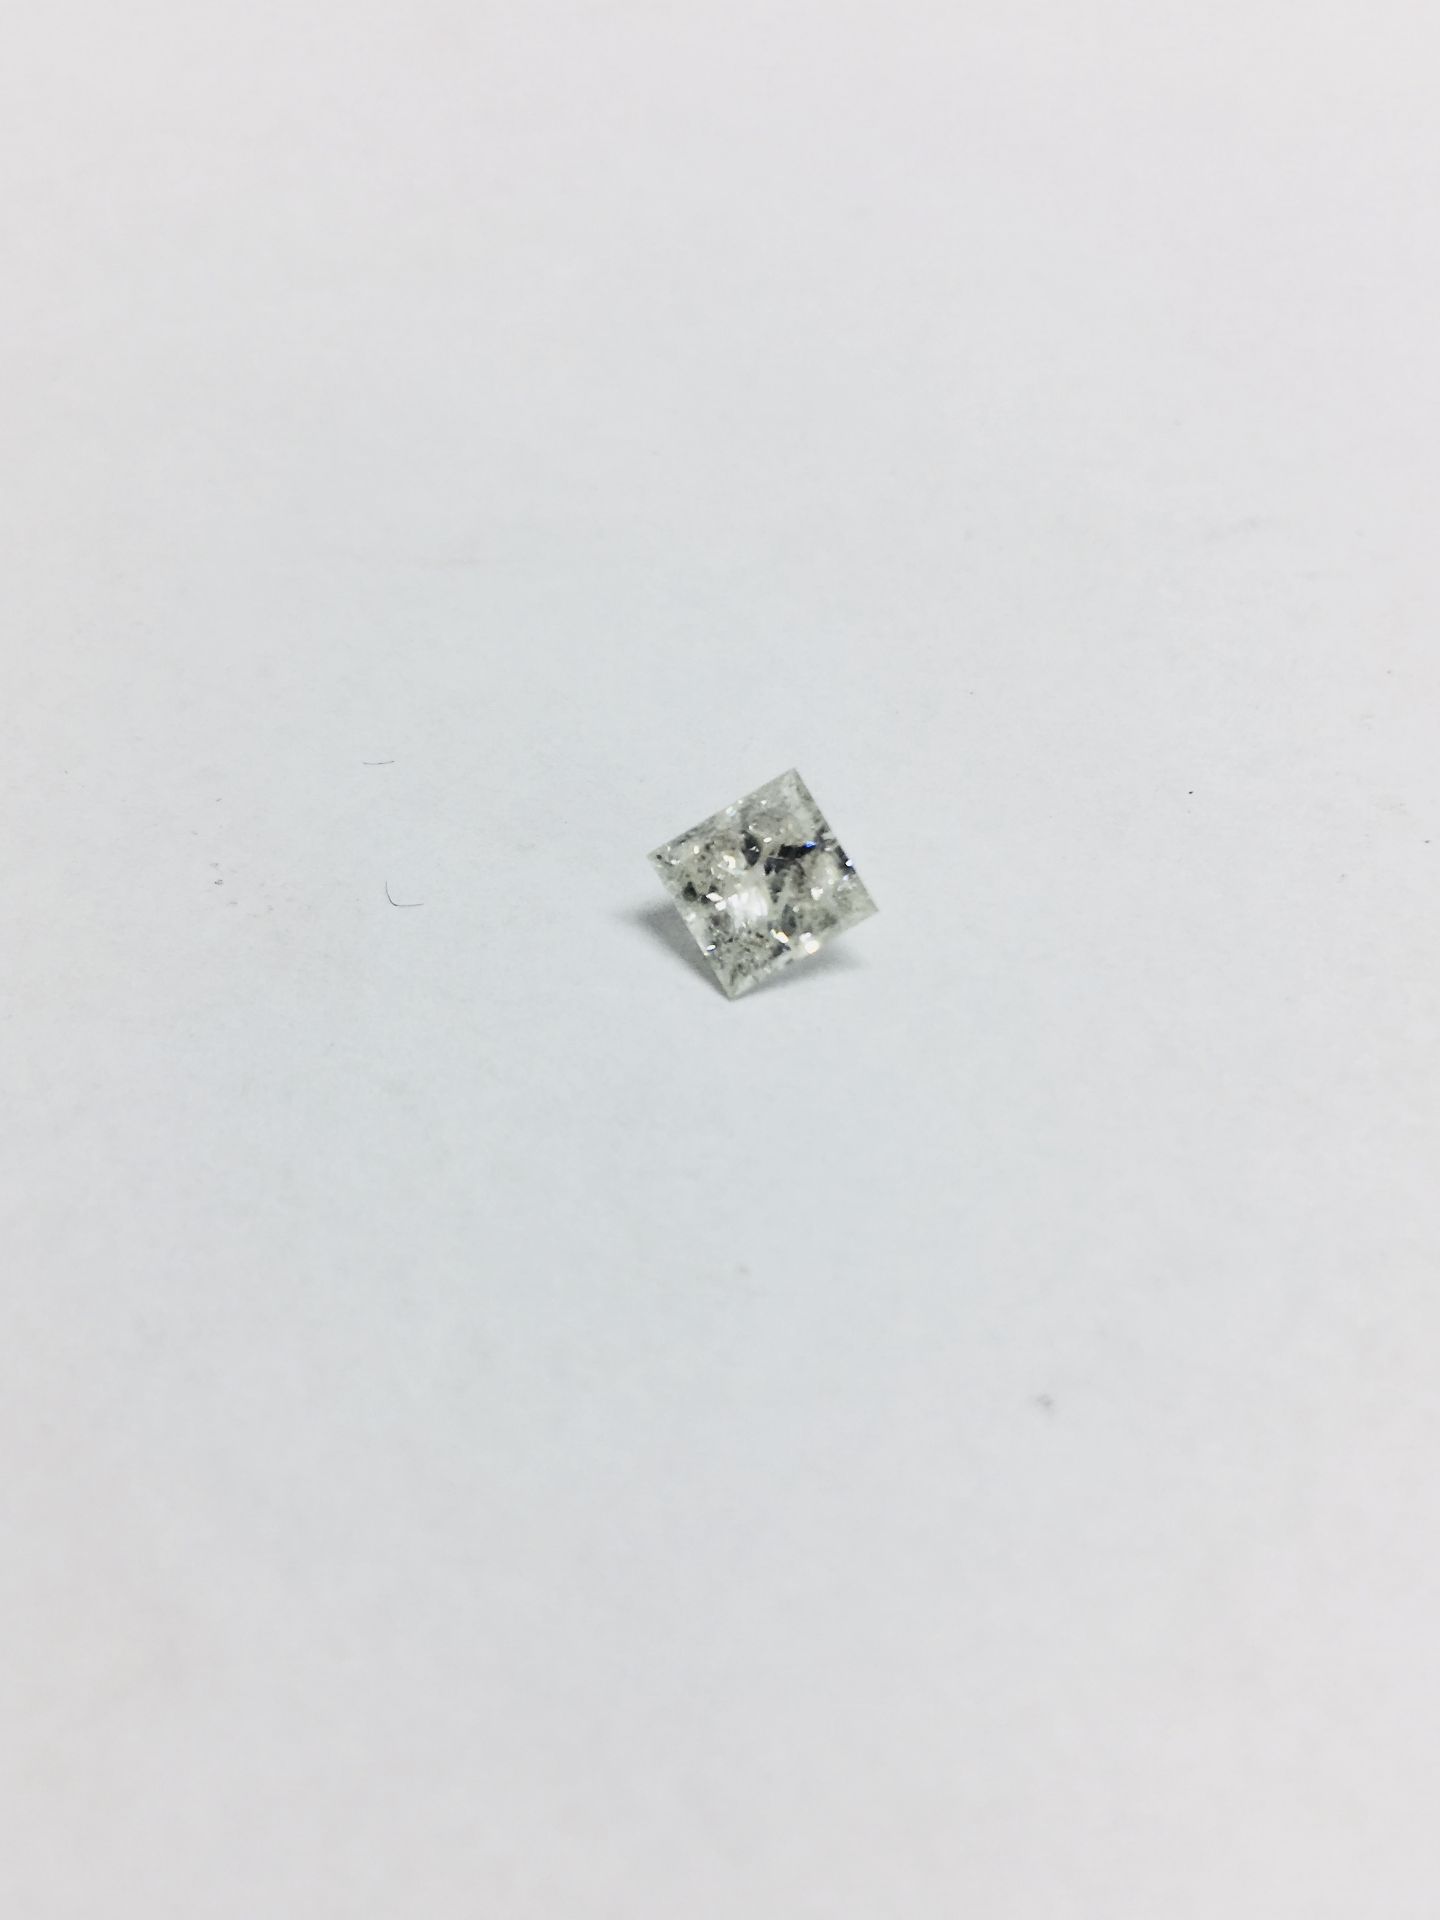 1.02ct Princess cut Diamond,Enhanced stone,H colour i2 clarity,values at 1490